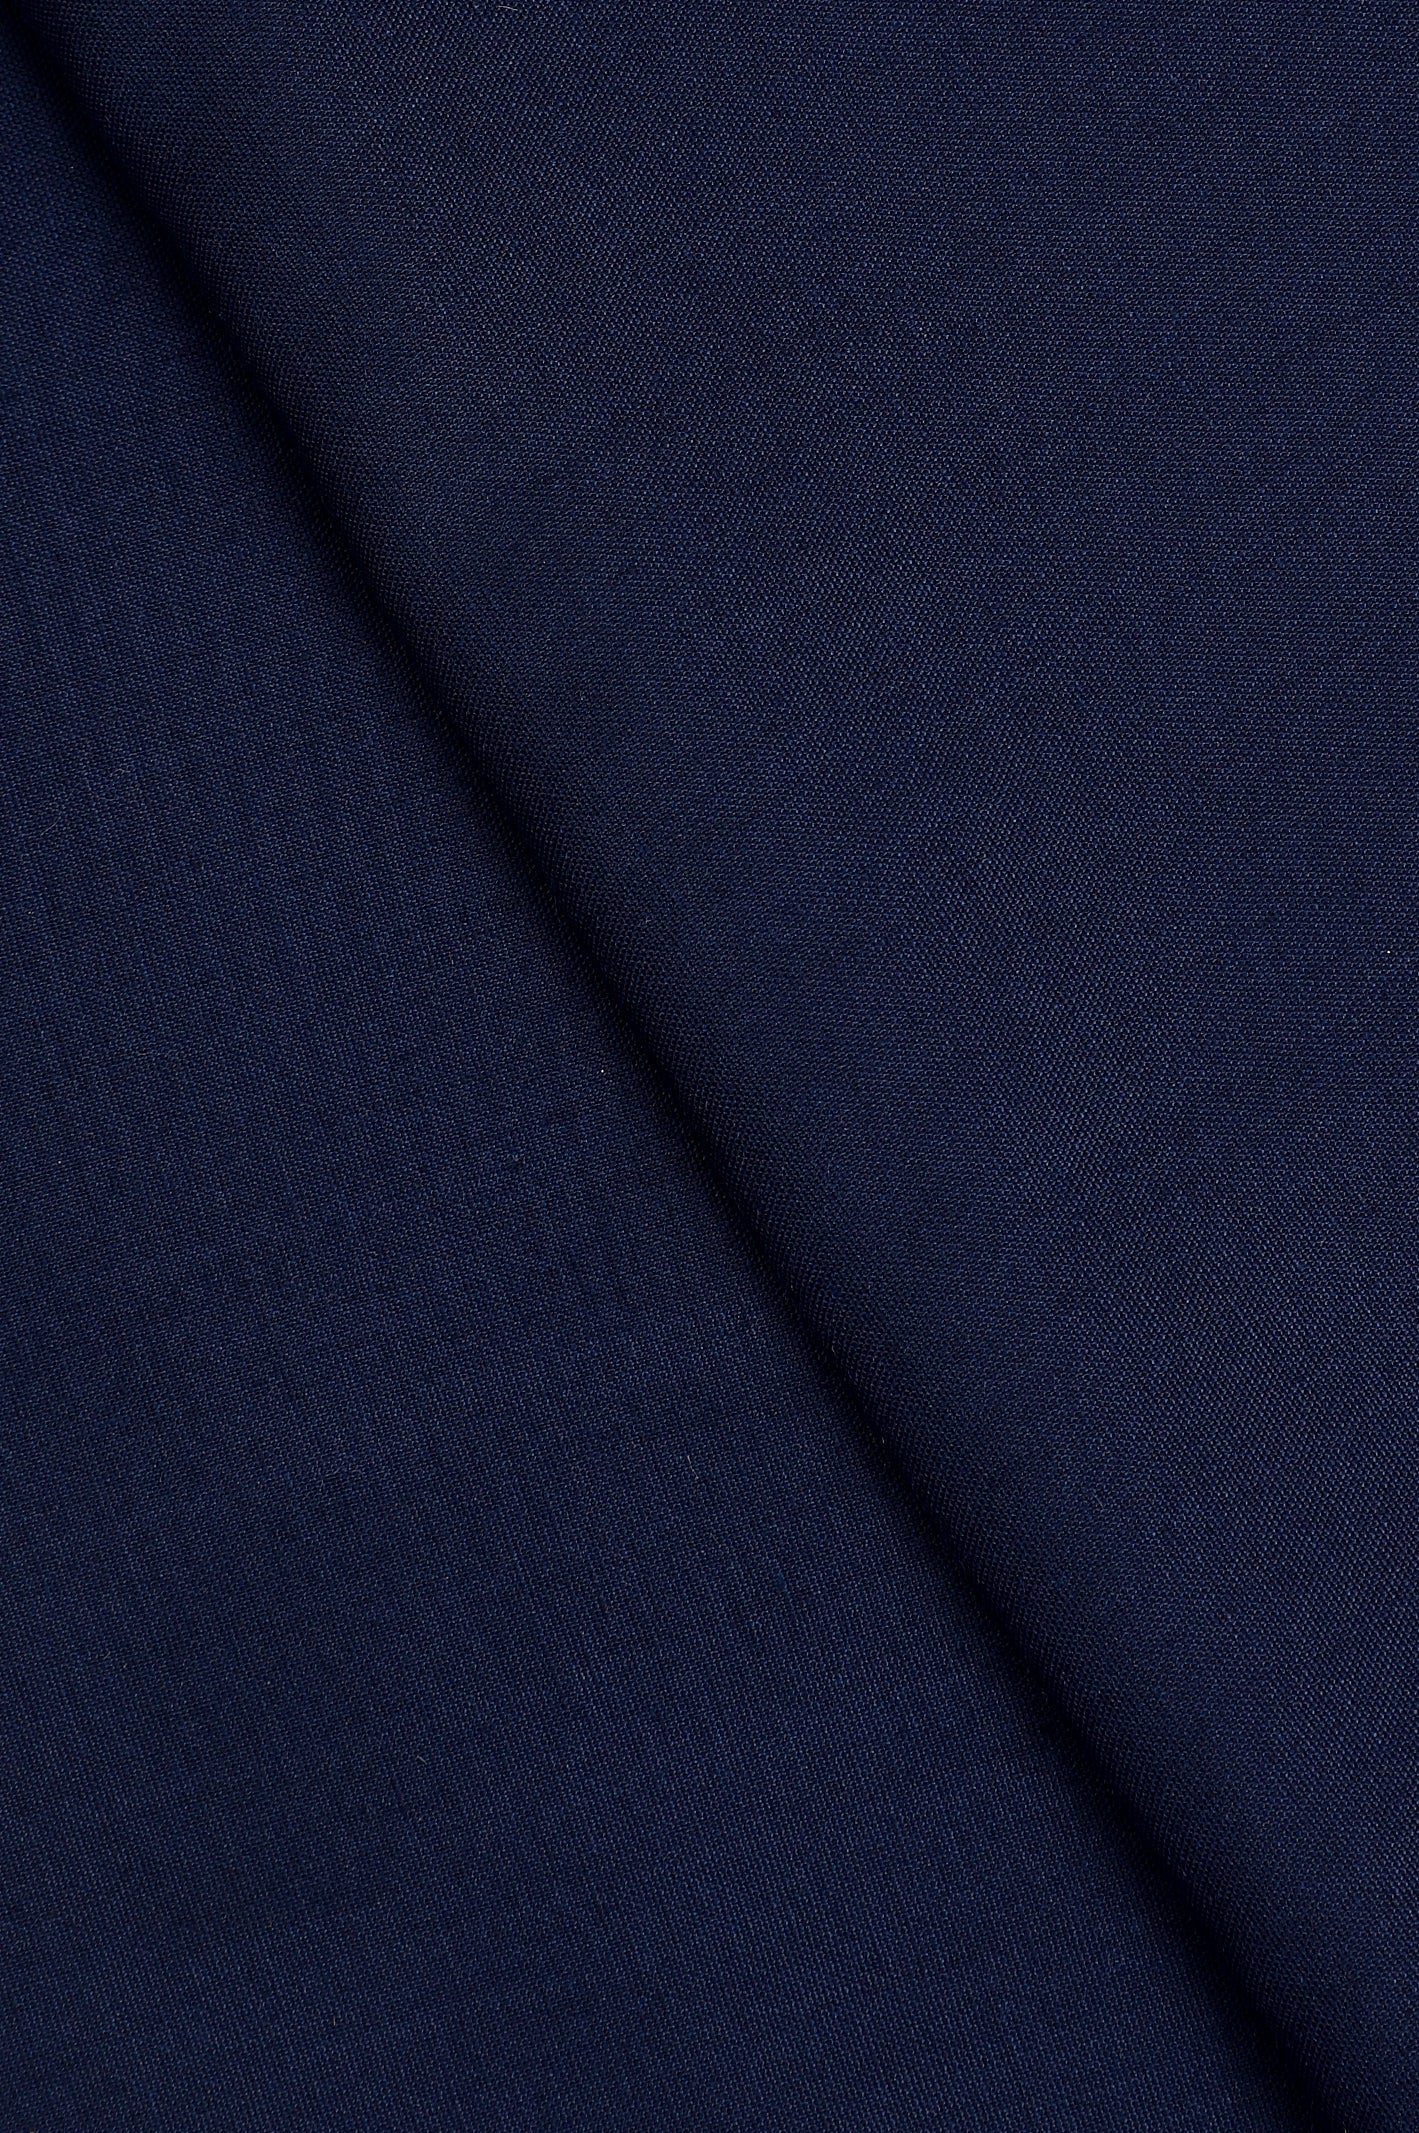 Wash & Wear Unstitched Fabric for Men SKU: US0187-N-BLUE - Diners